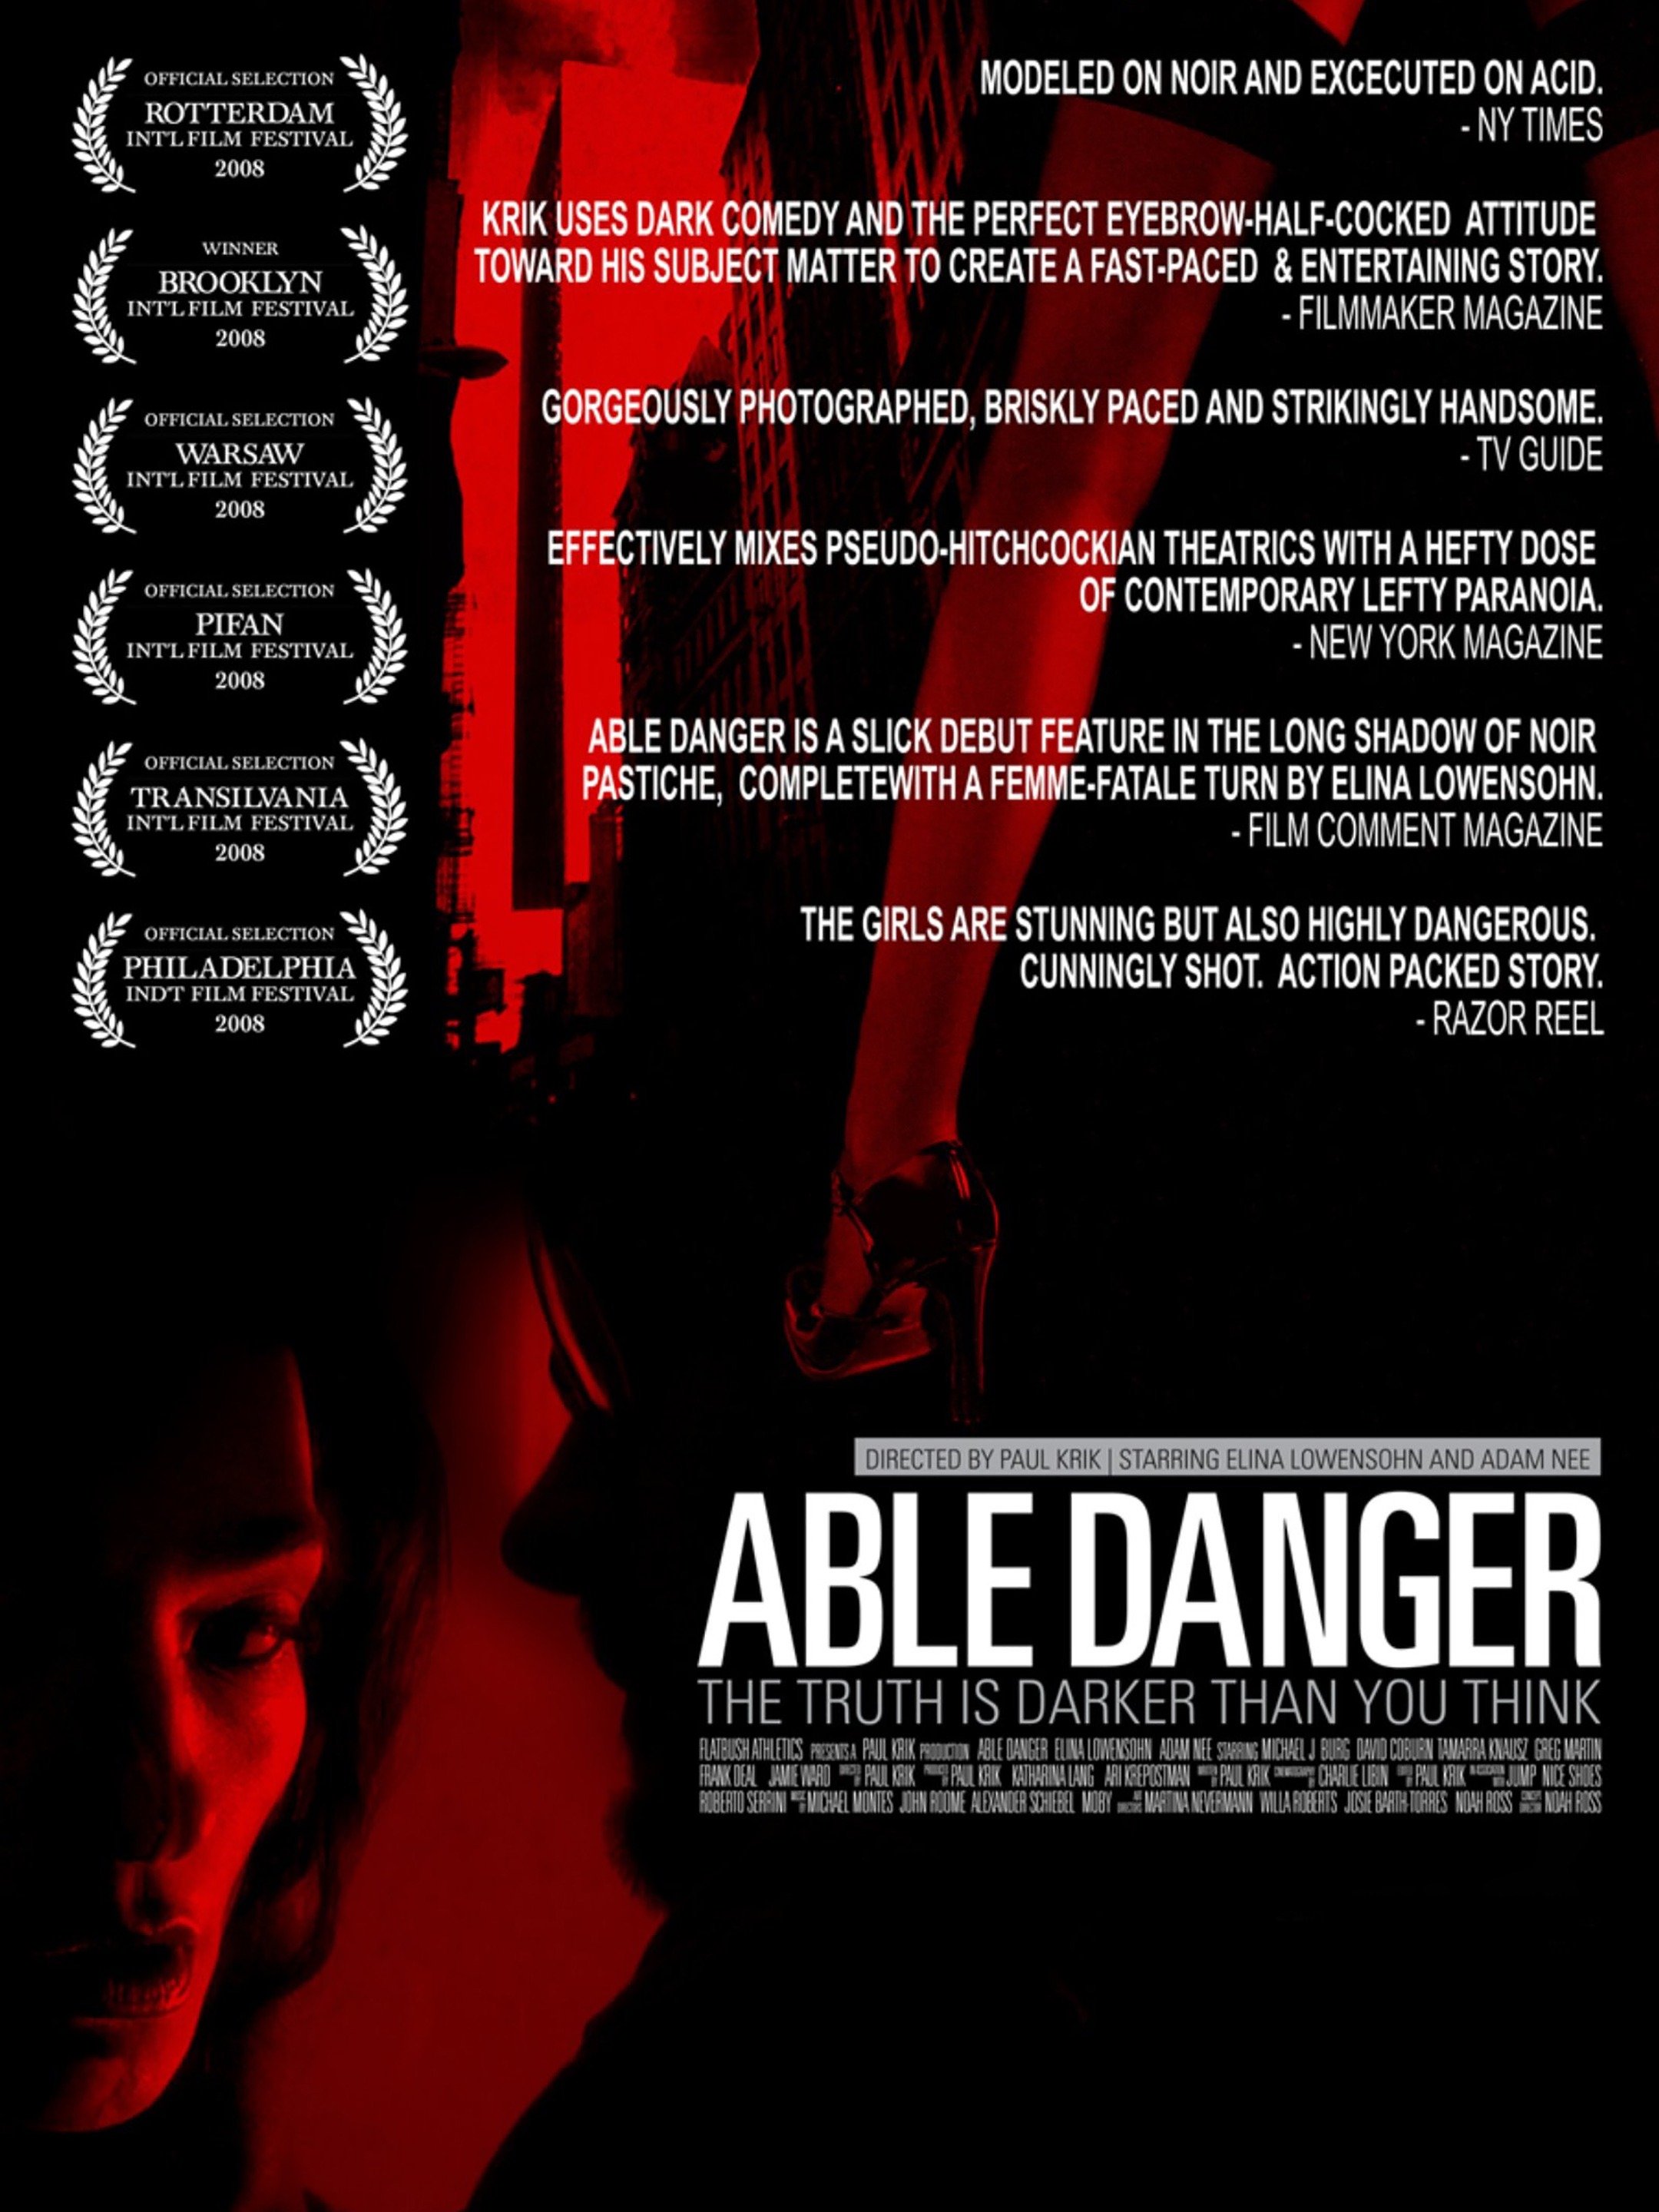 Who is abel danger